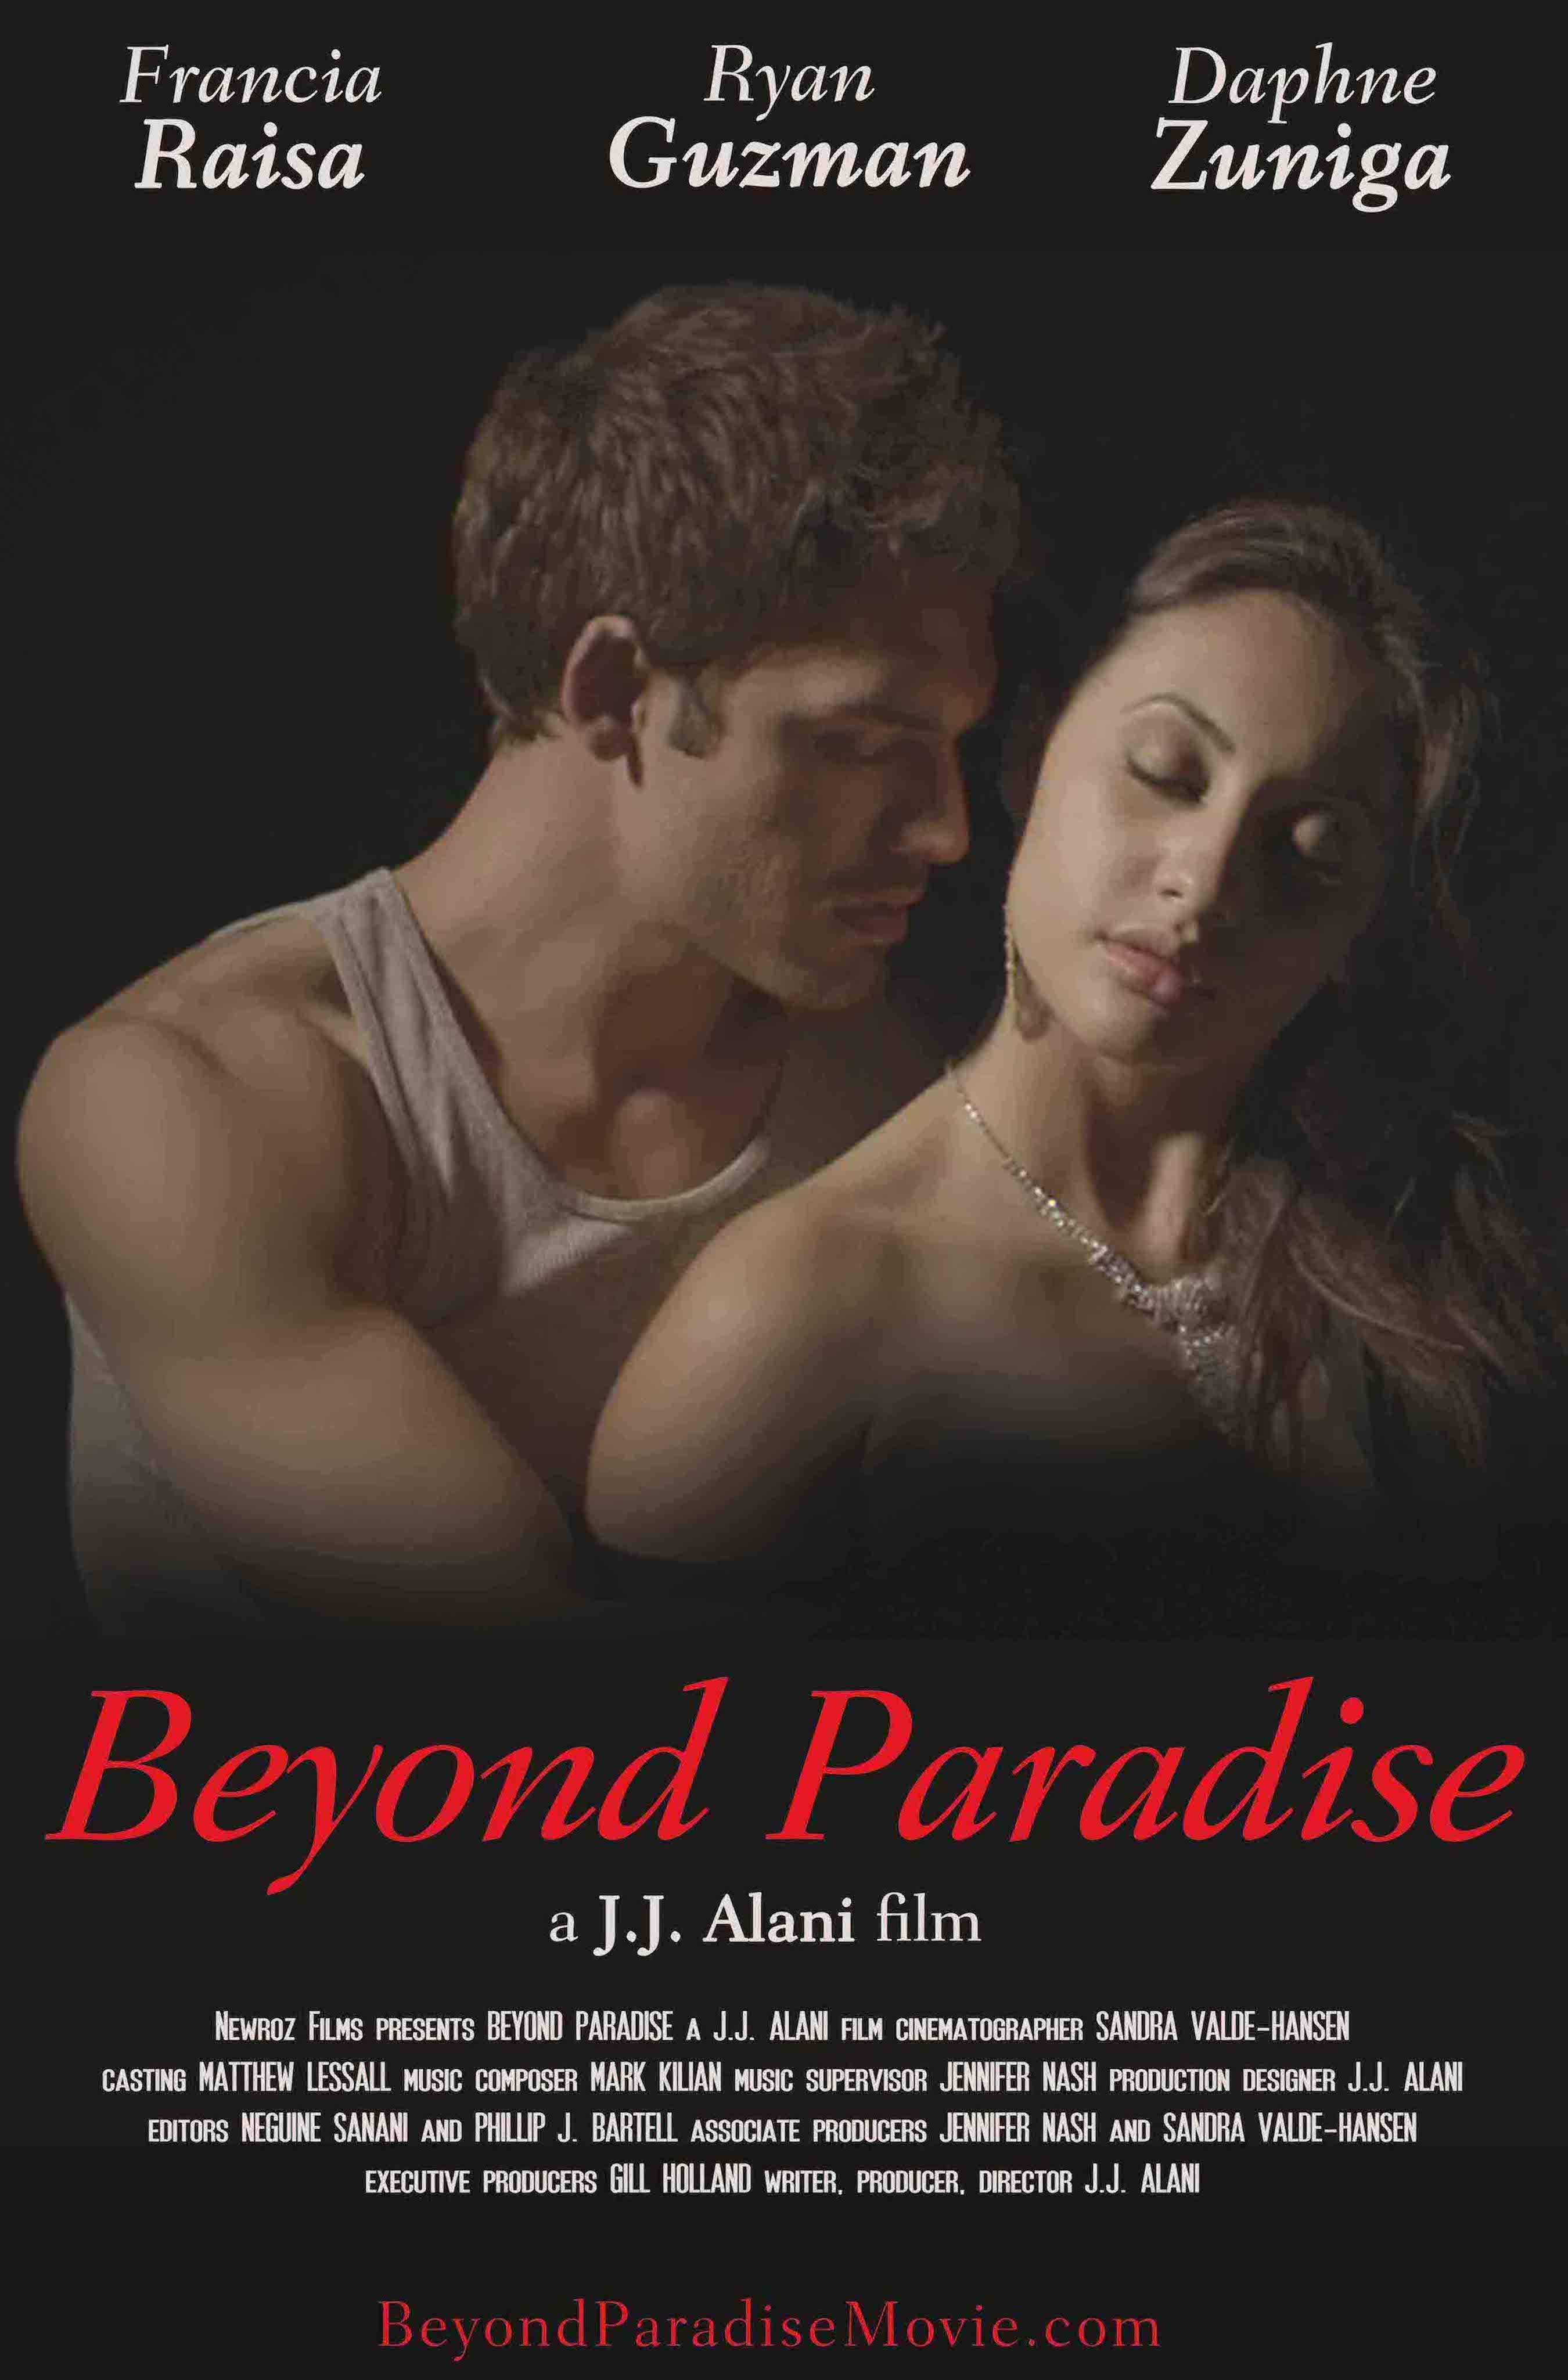 Poster #2 #BeyondParadise starring #RyanGuzman alongside #FranciaRaisa #DaphneZuniga